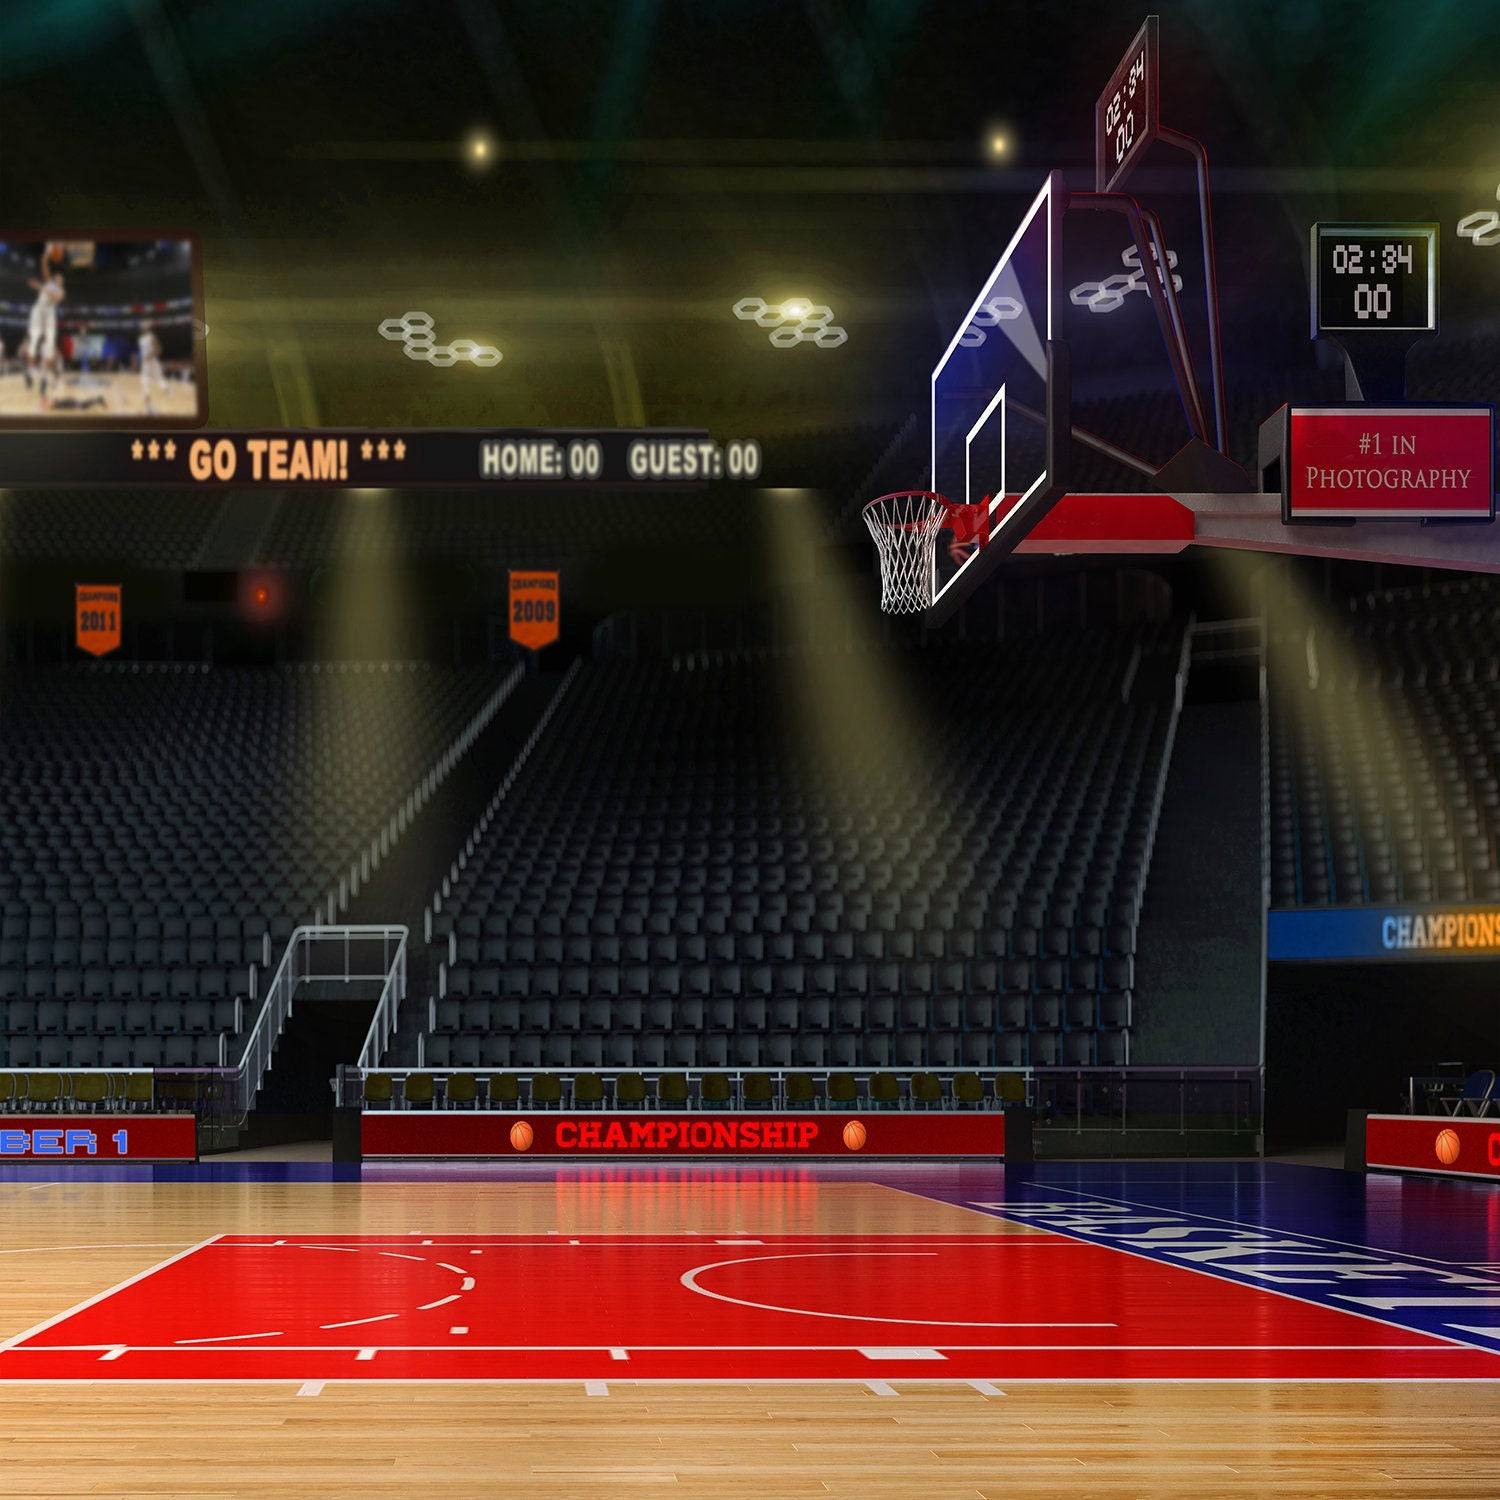 NBA Basketball Court Backdrop - Pro 8  x 8  